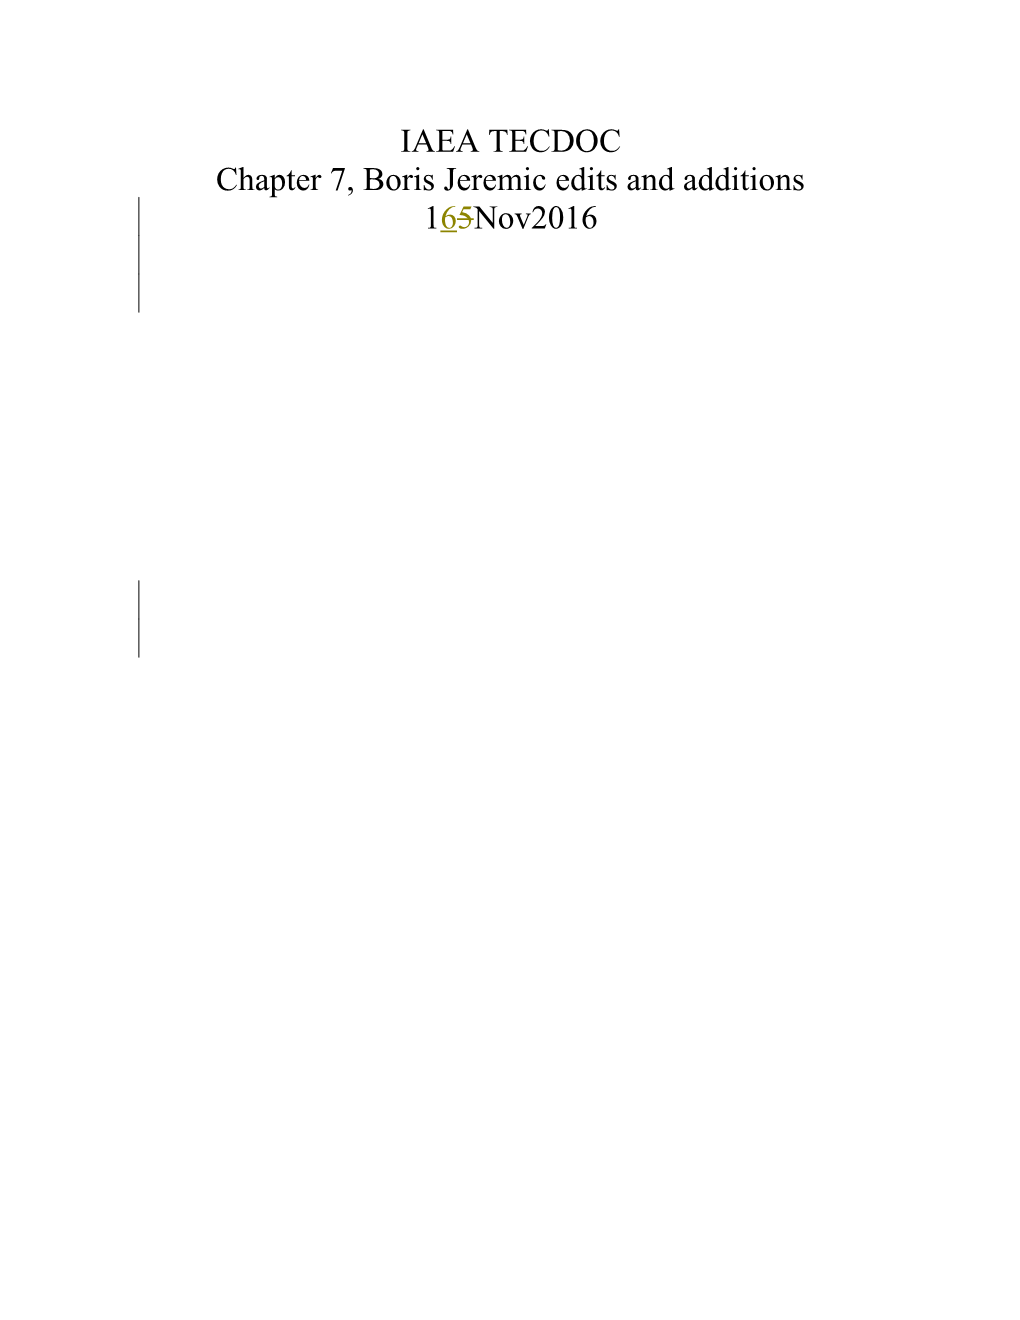 Chapter 7, Boris Jeremic Edits and Additions